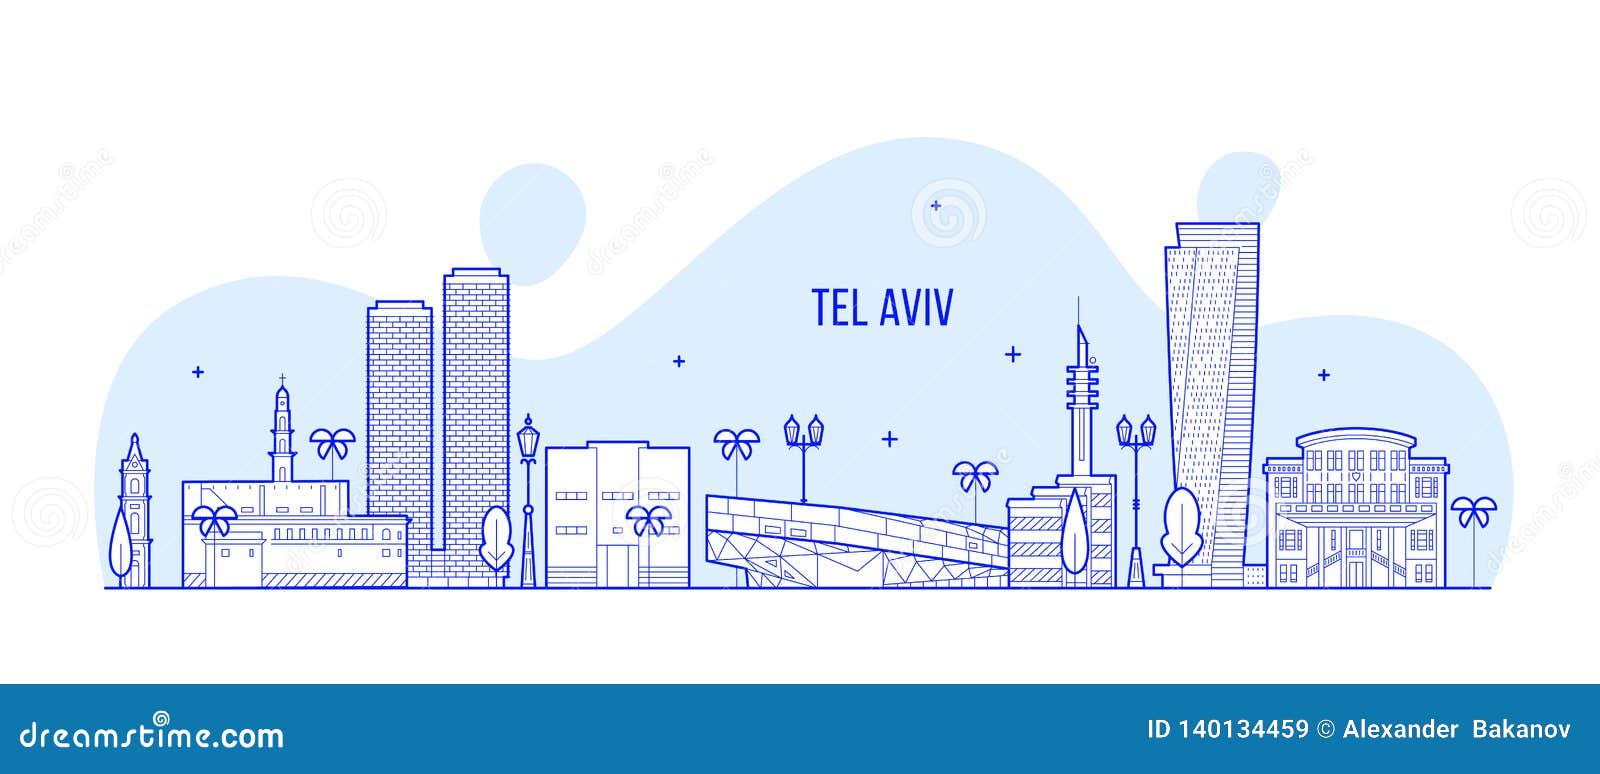 tel aviv skyline israel city buildings  line